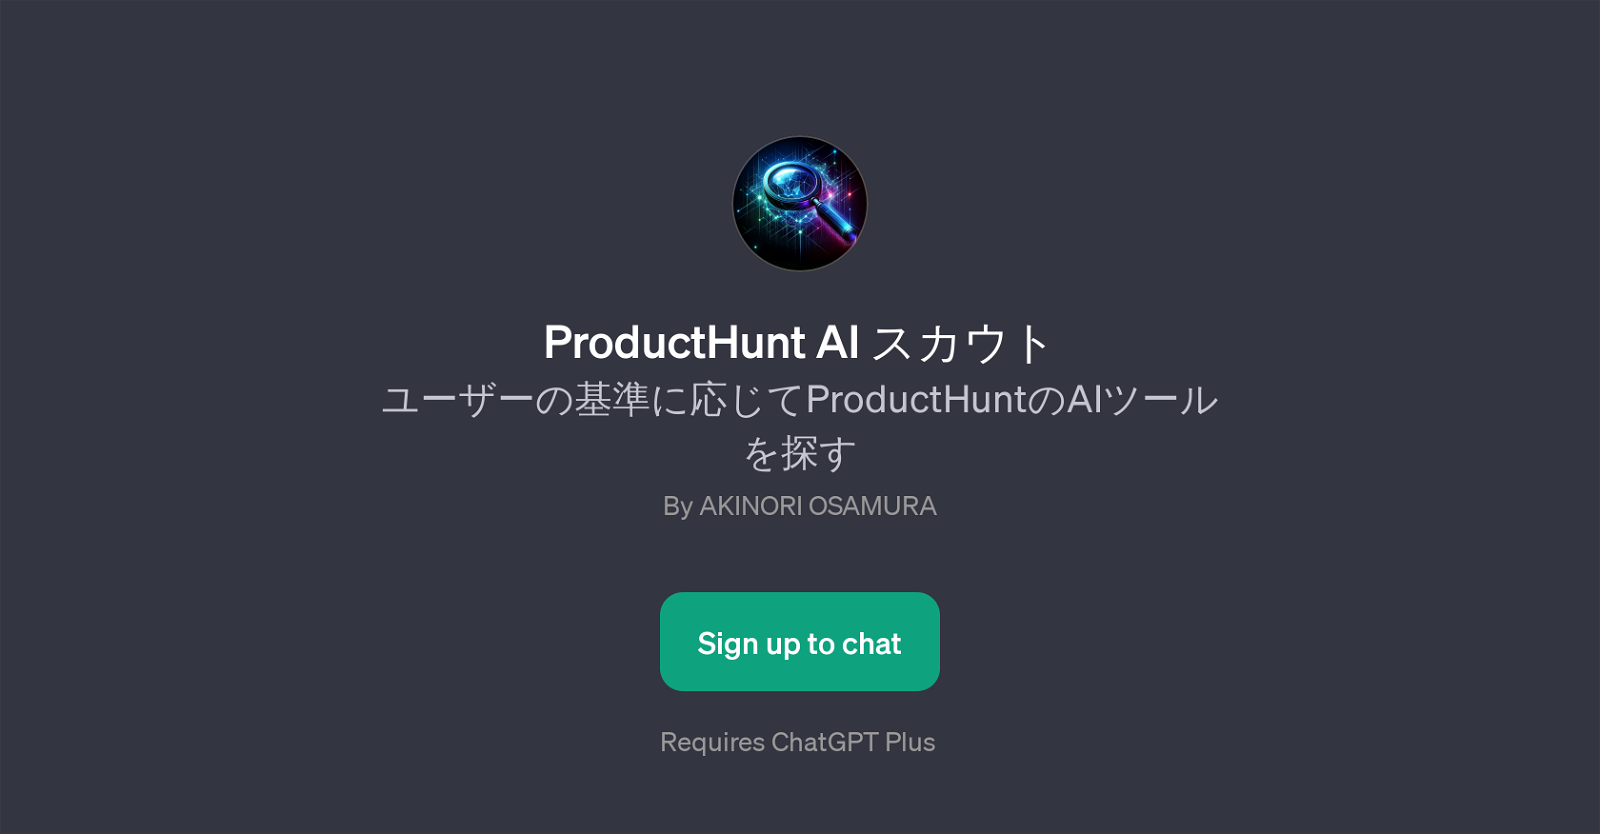 ProductHunt AI website